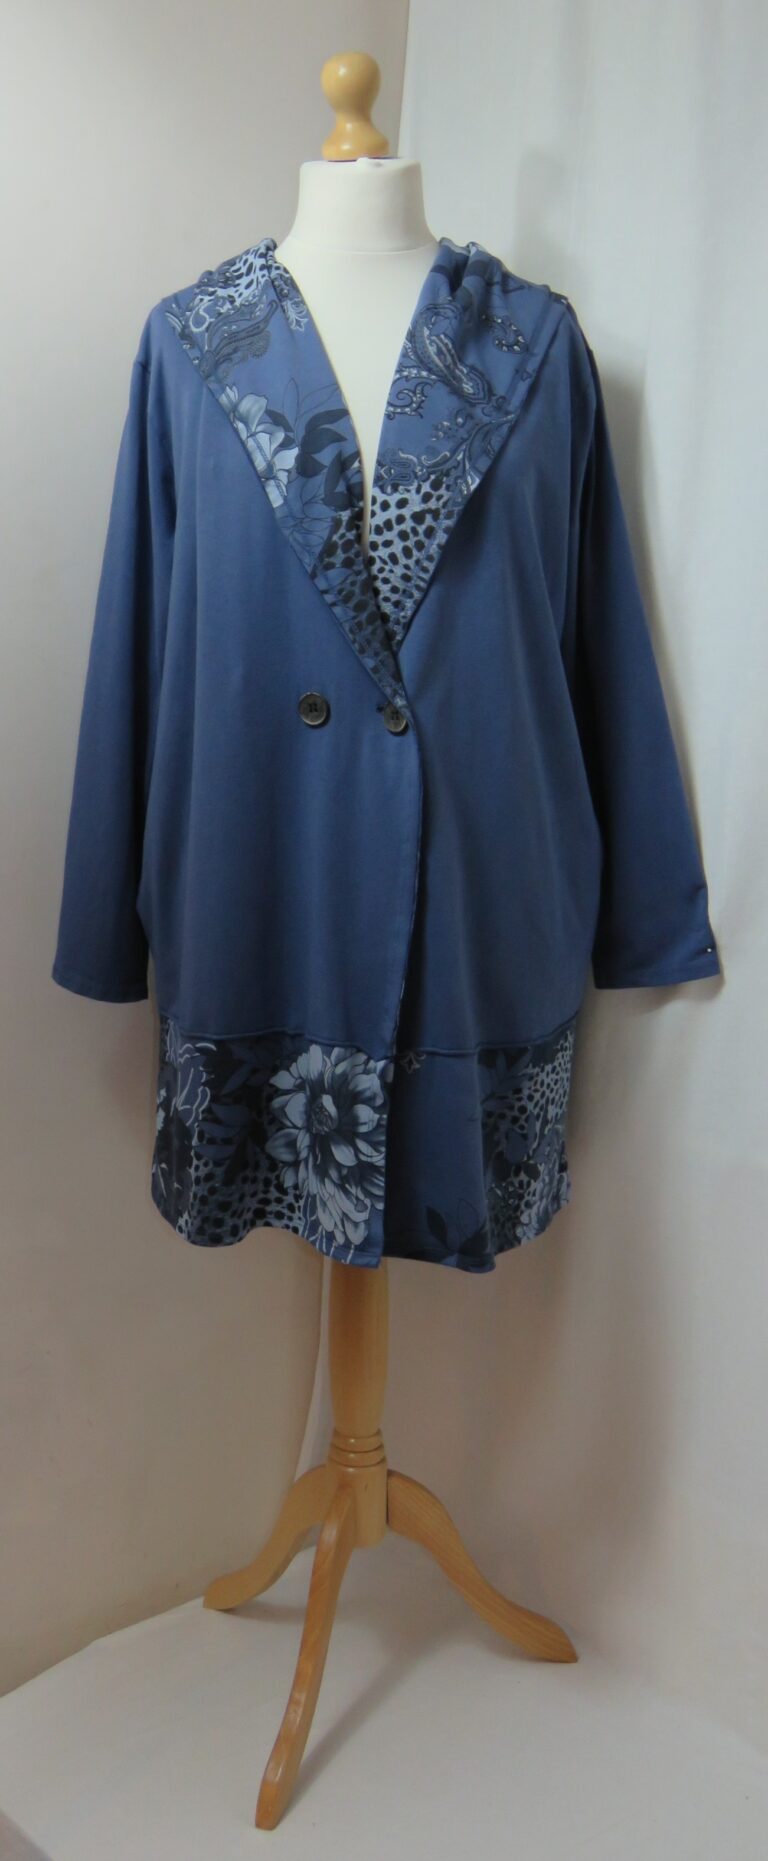 Cornflower blue, floral-panel, hooded jacket